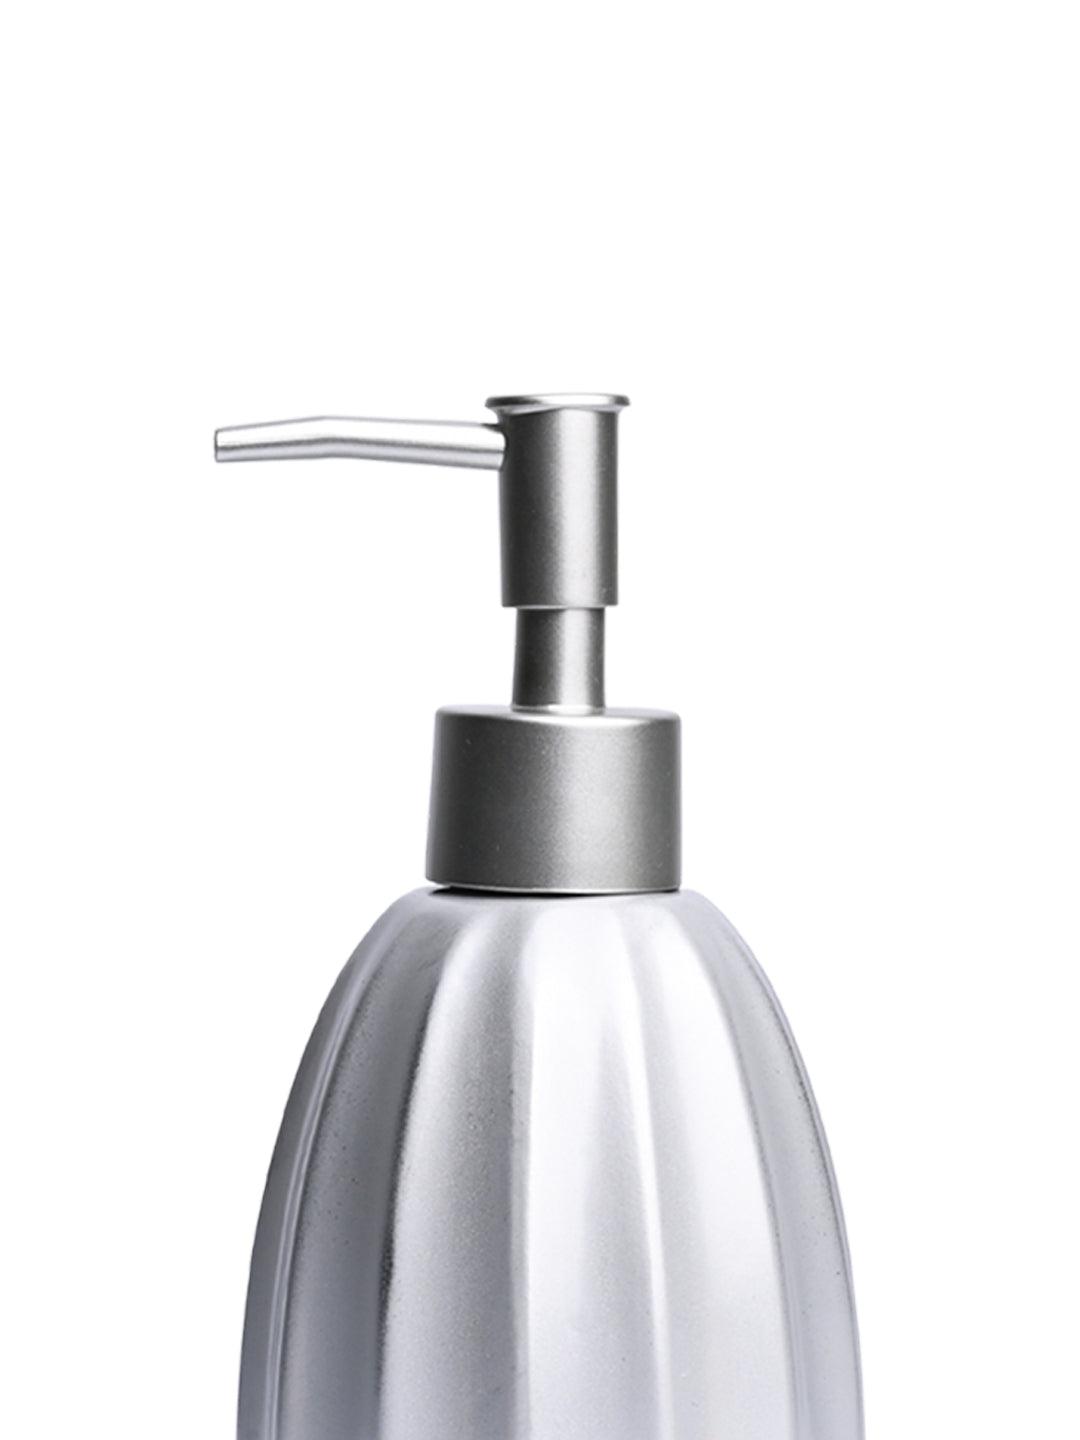 Silver Soap Dispenser - MARKET99